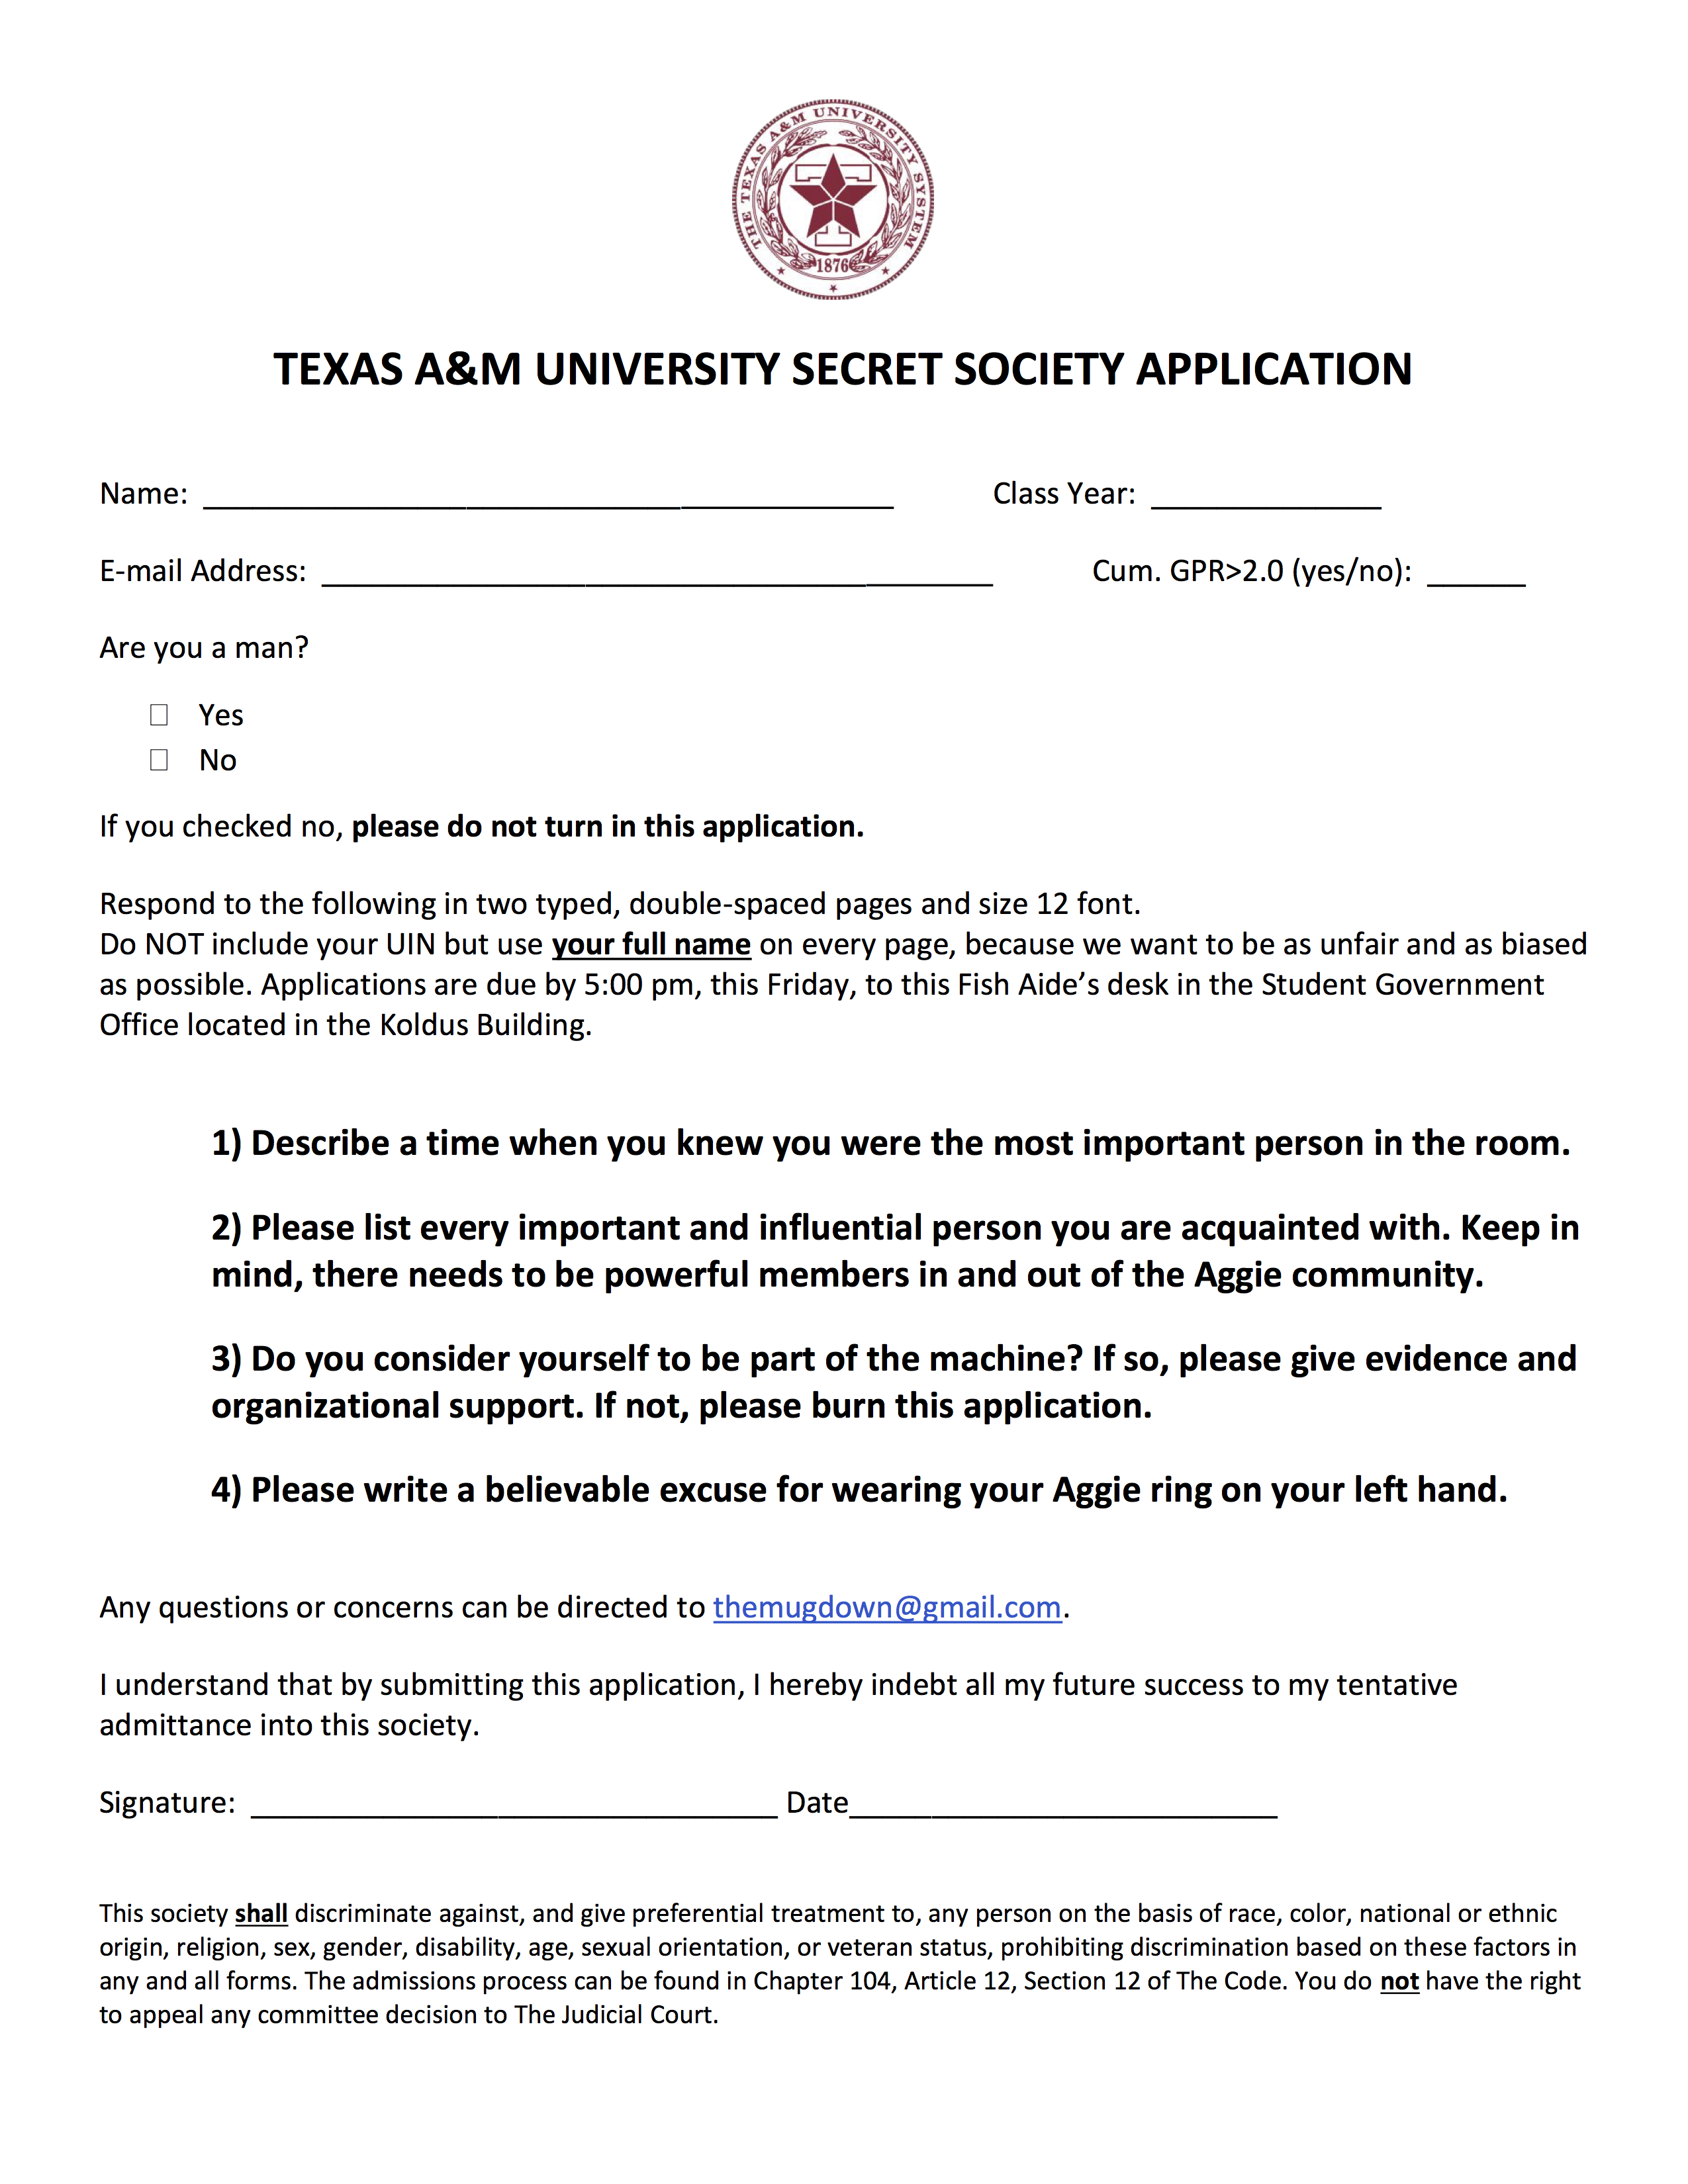 Secret Society Application